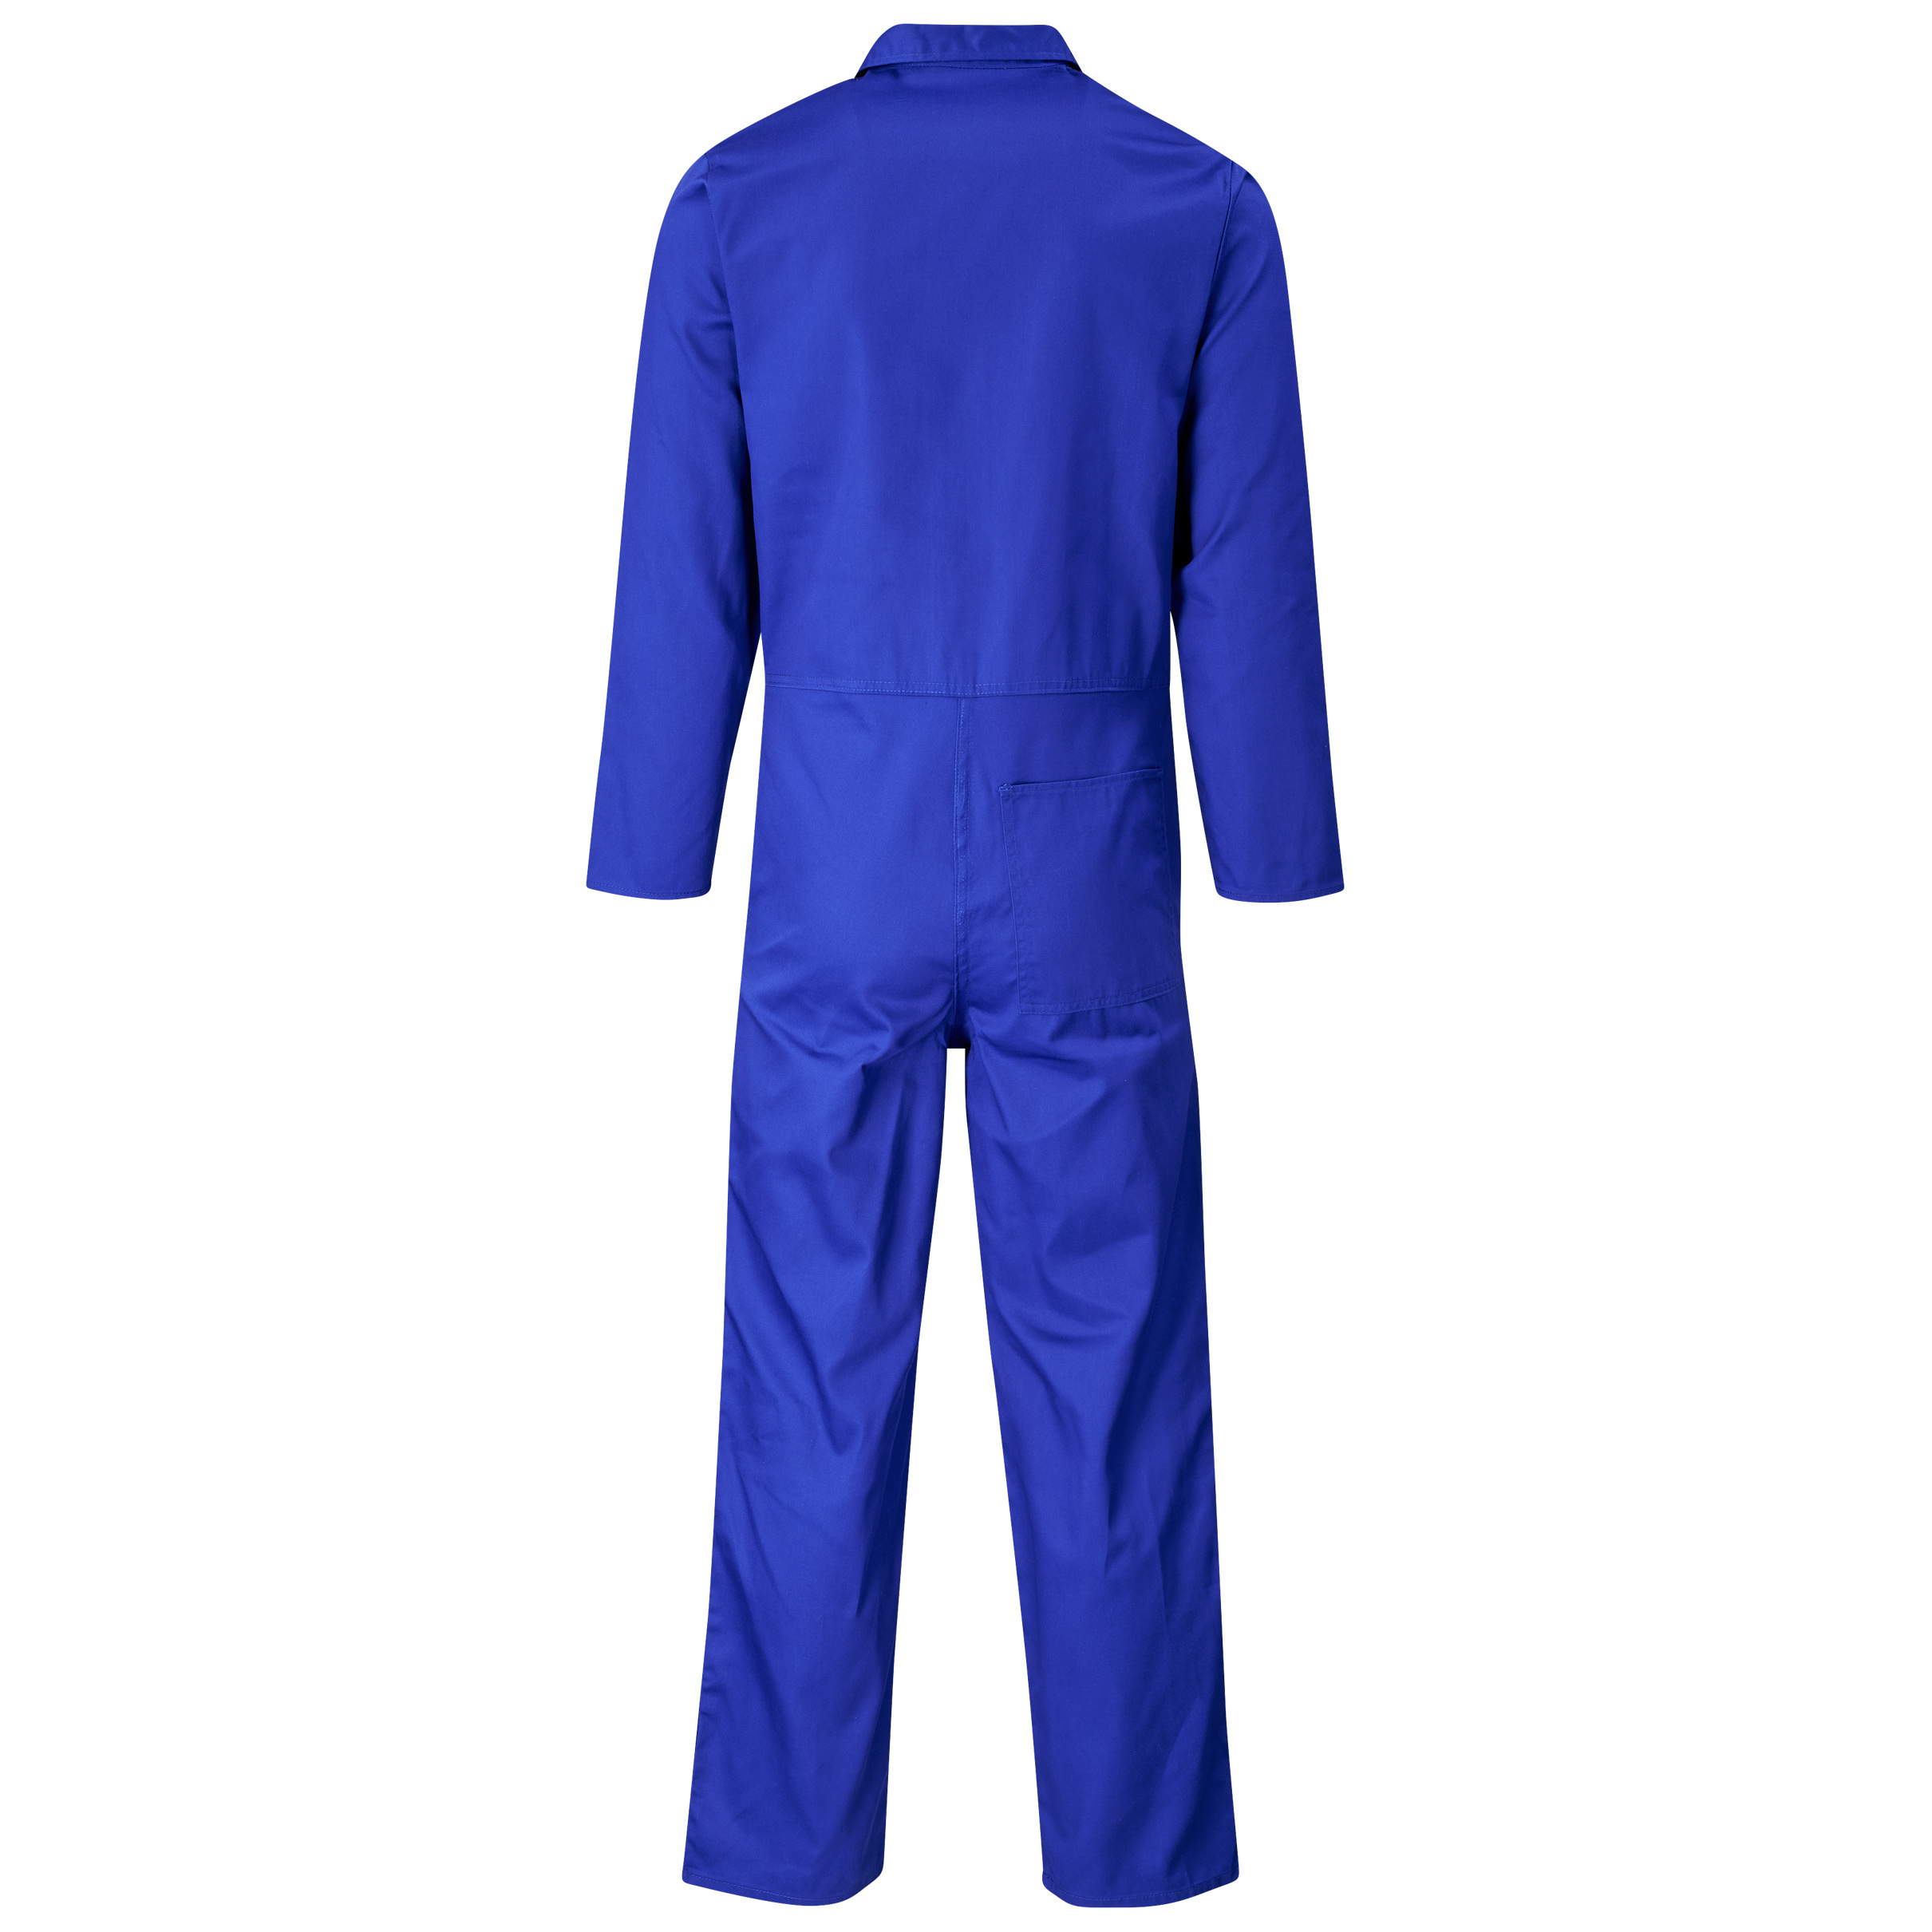 Safety Polycotton Boiler Suit royal blue ALT-1108-RB_default by brandxellence workwear